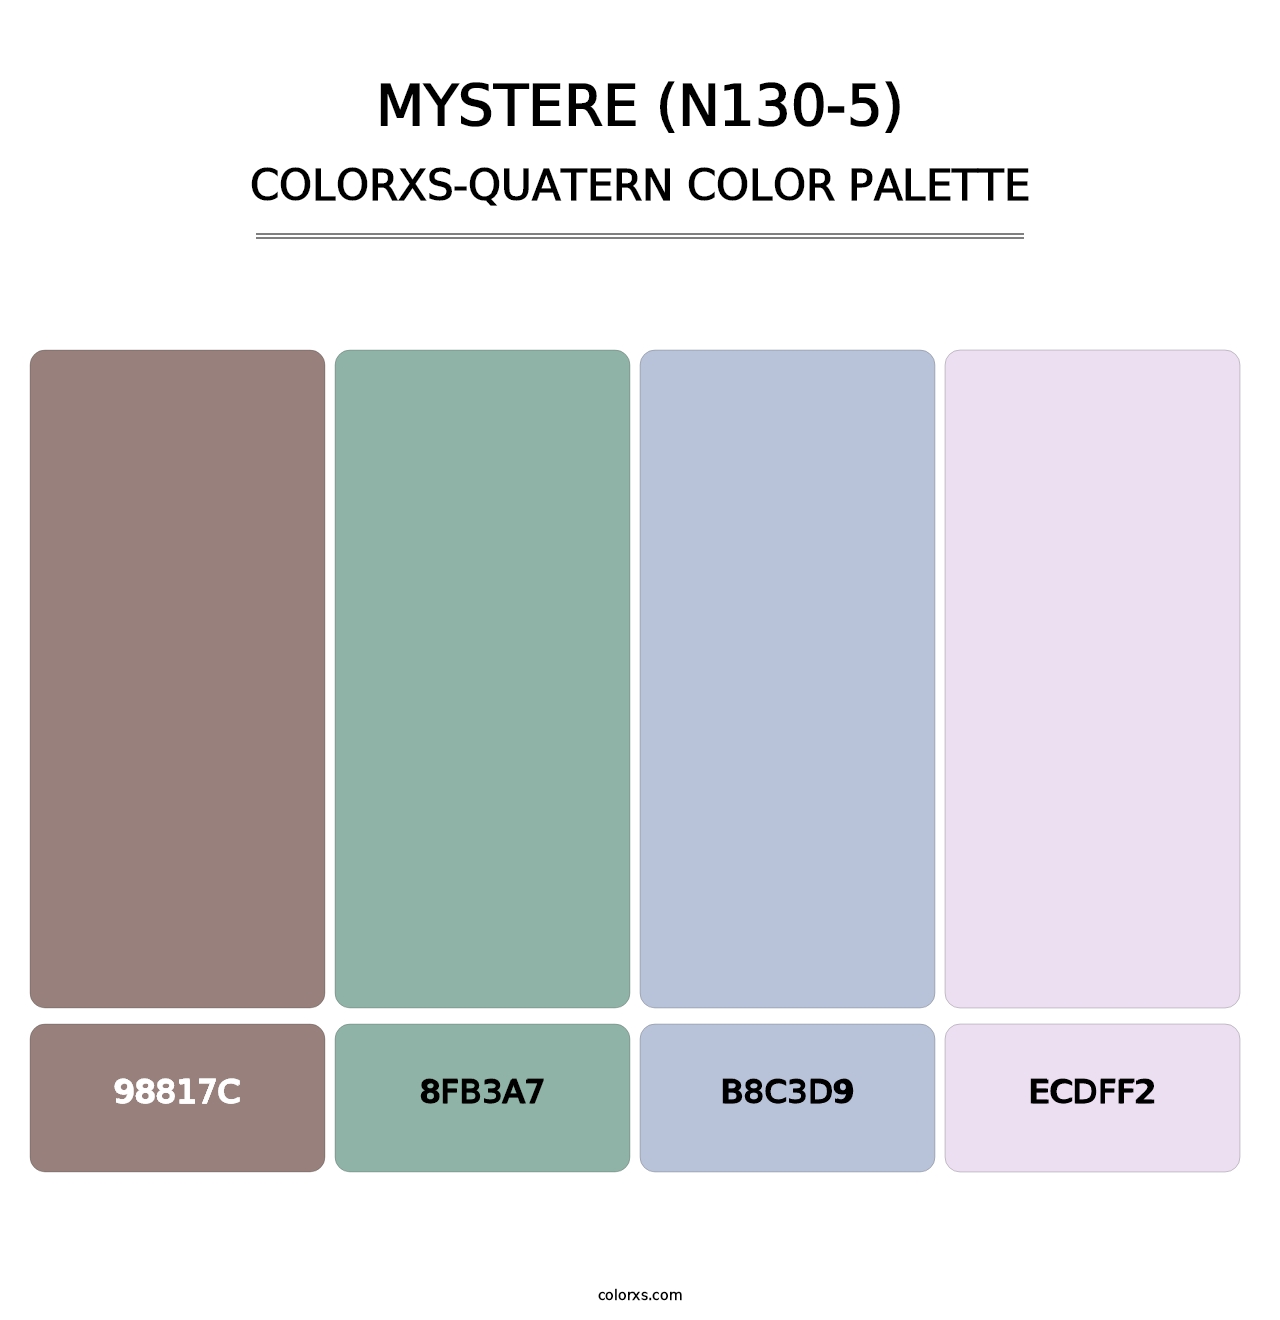 Mystere (N130-5) - Colorxs Quatern Palette